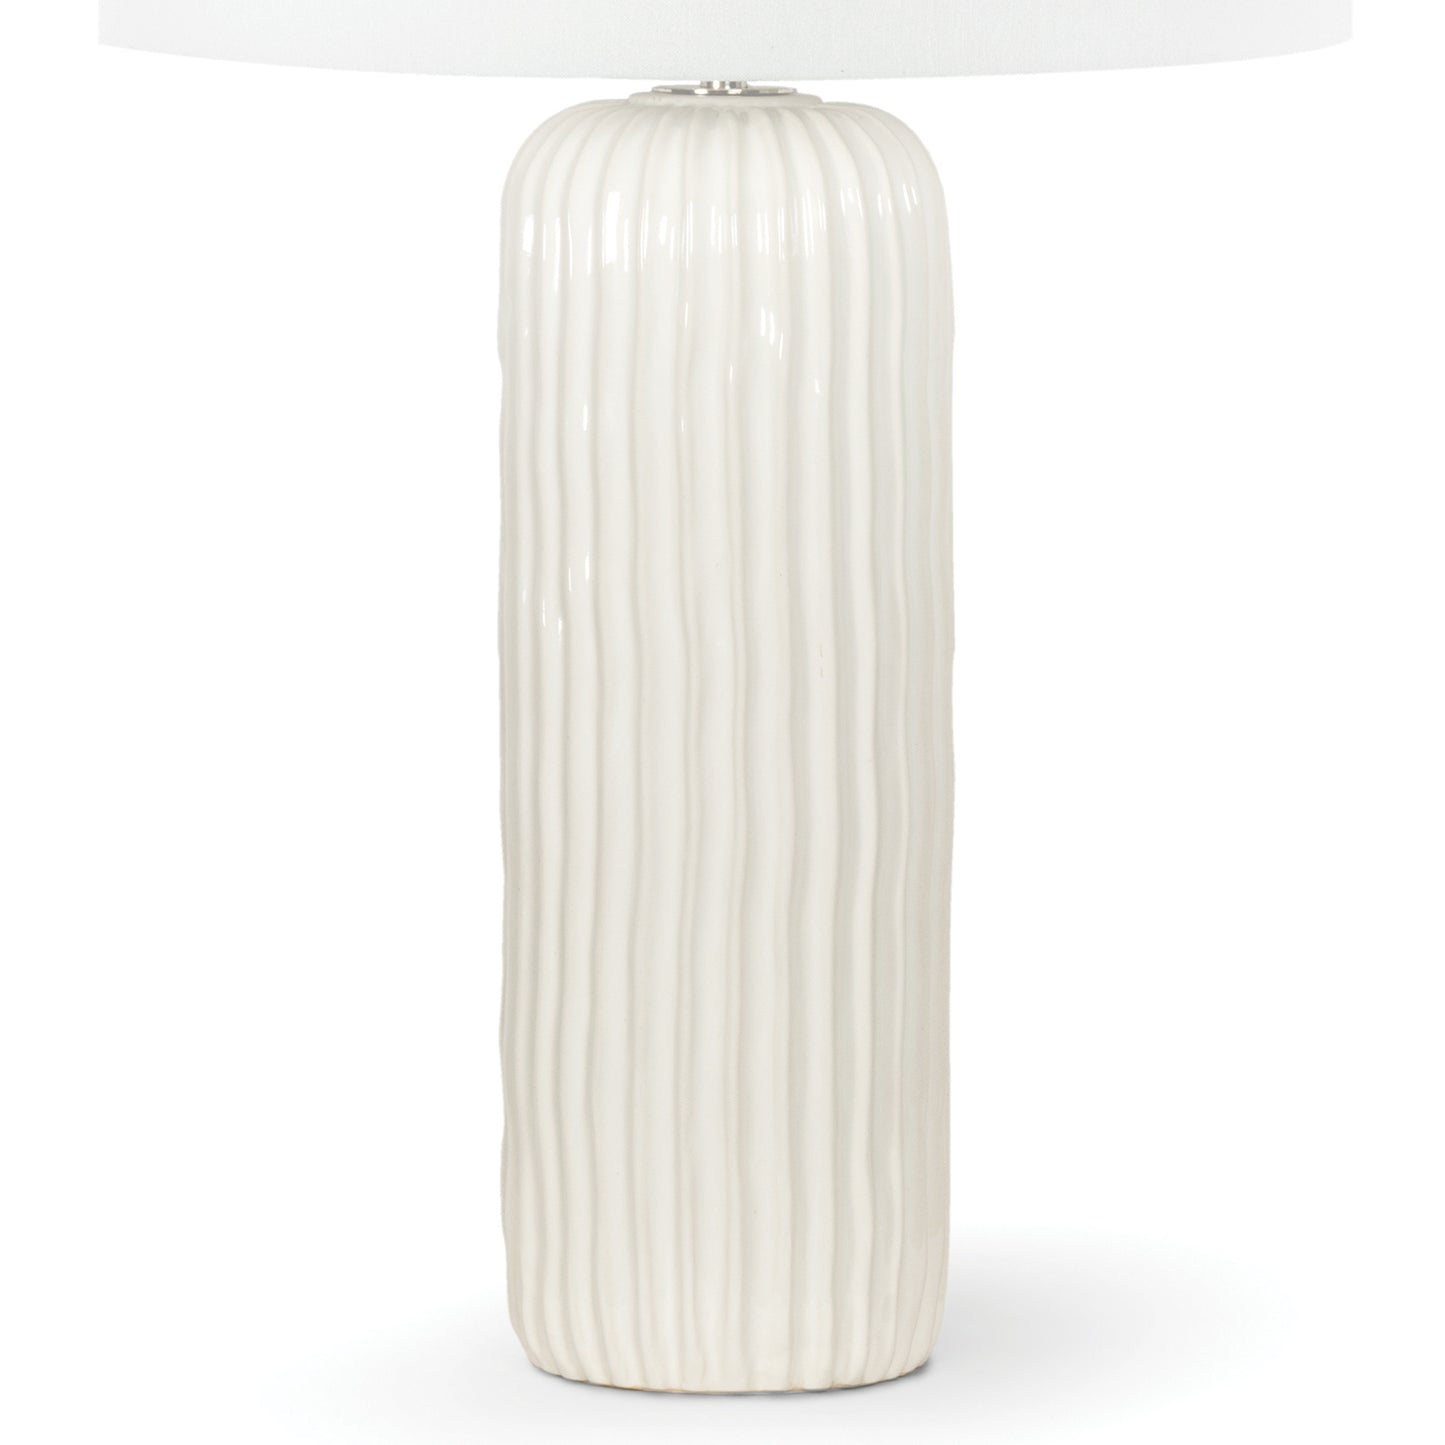 Caldon Ceramic Table Lamp by Coastal Living